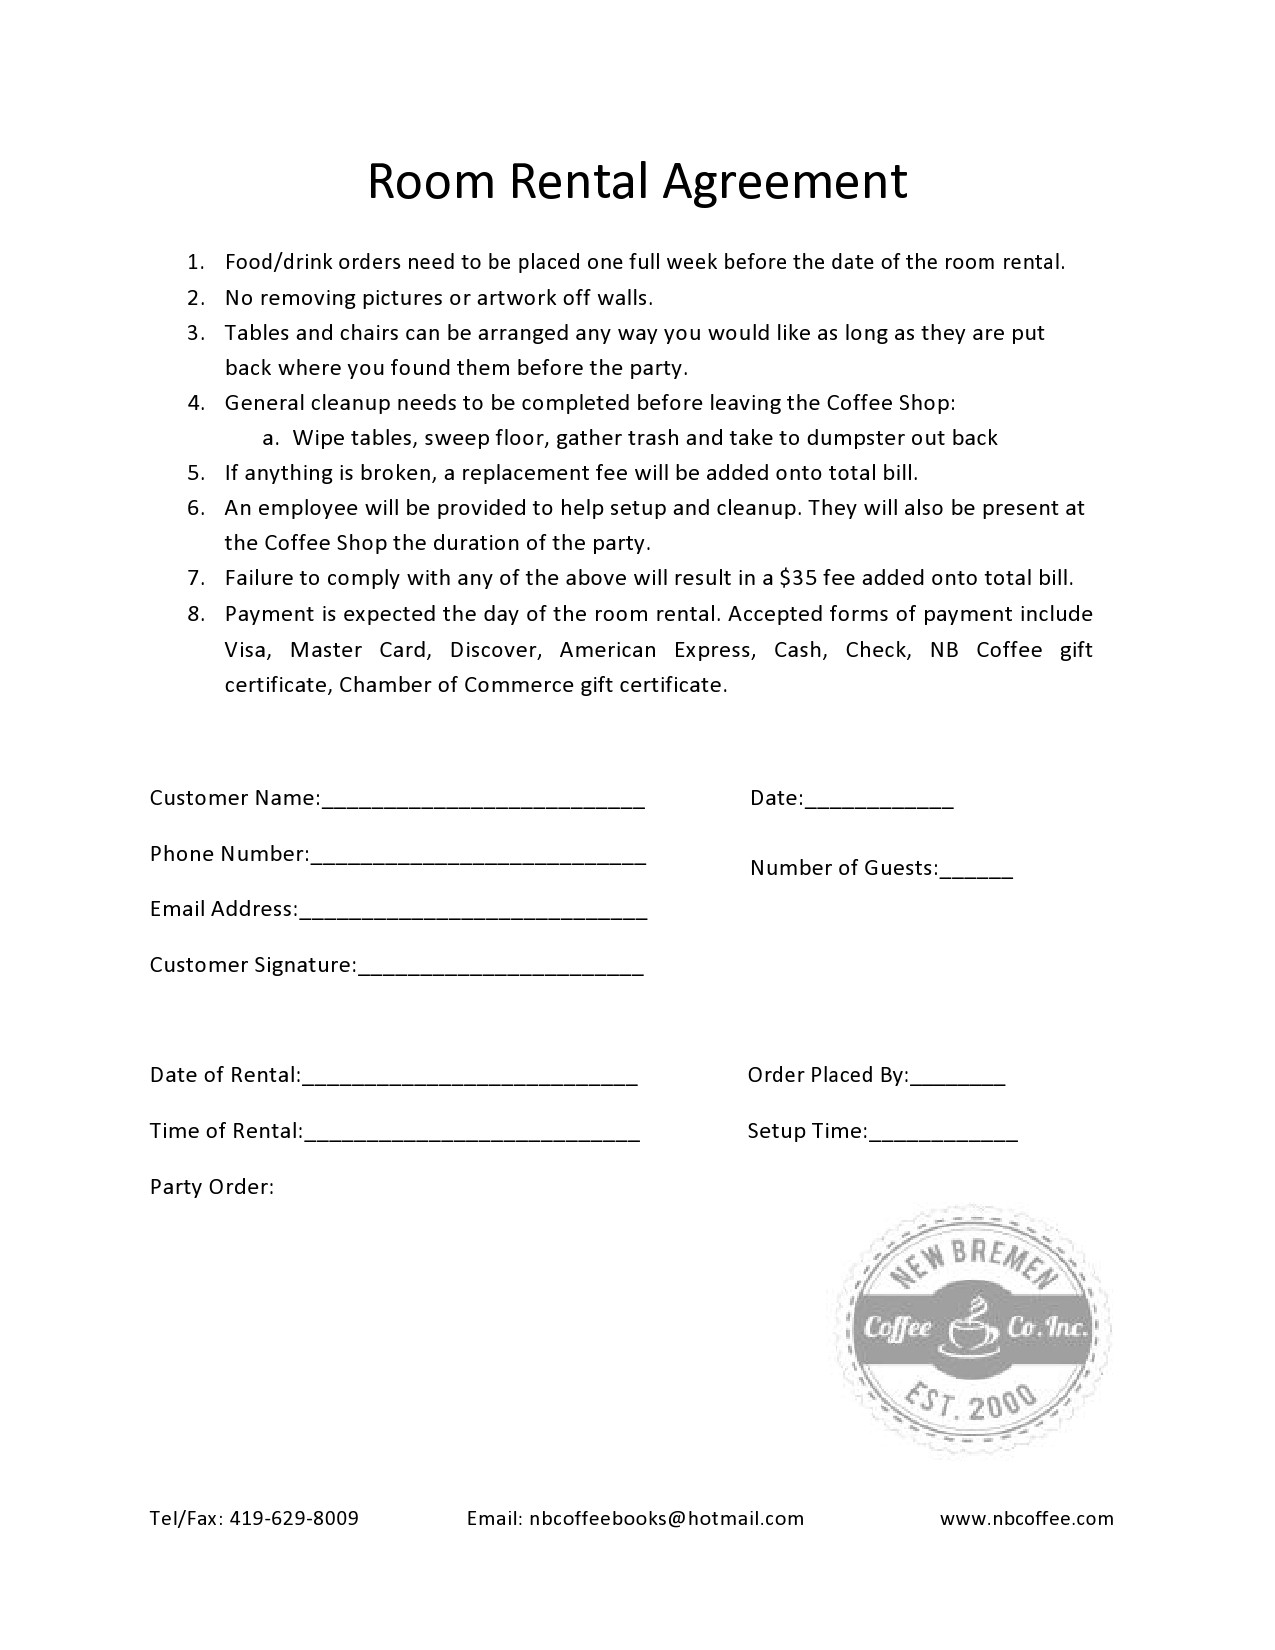 Free room rental agreement 06